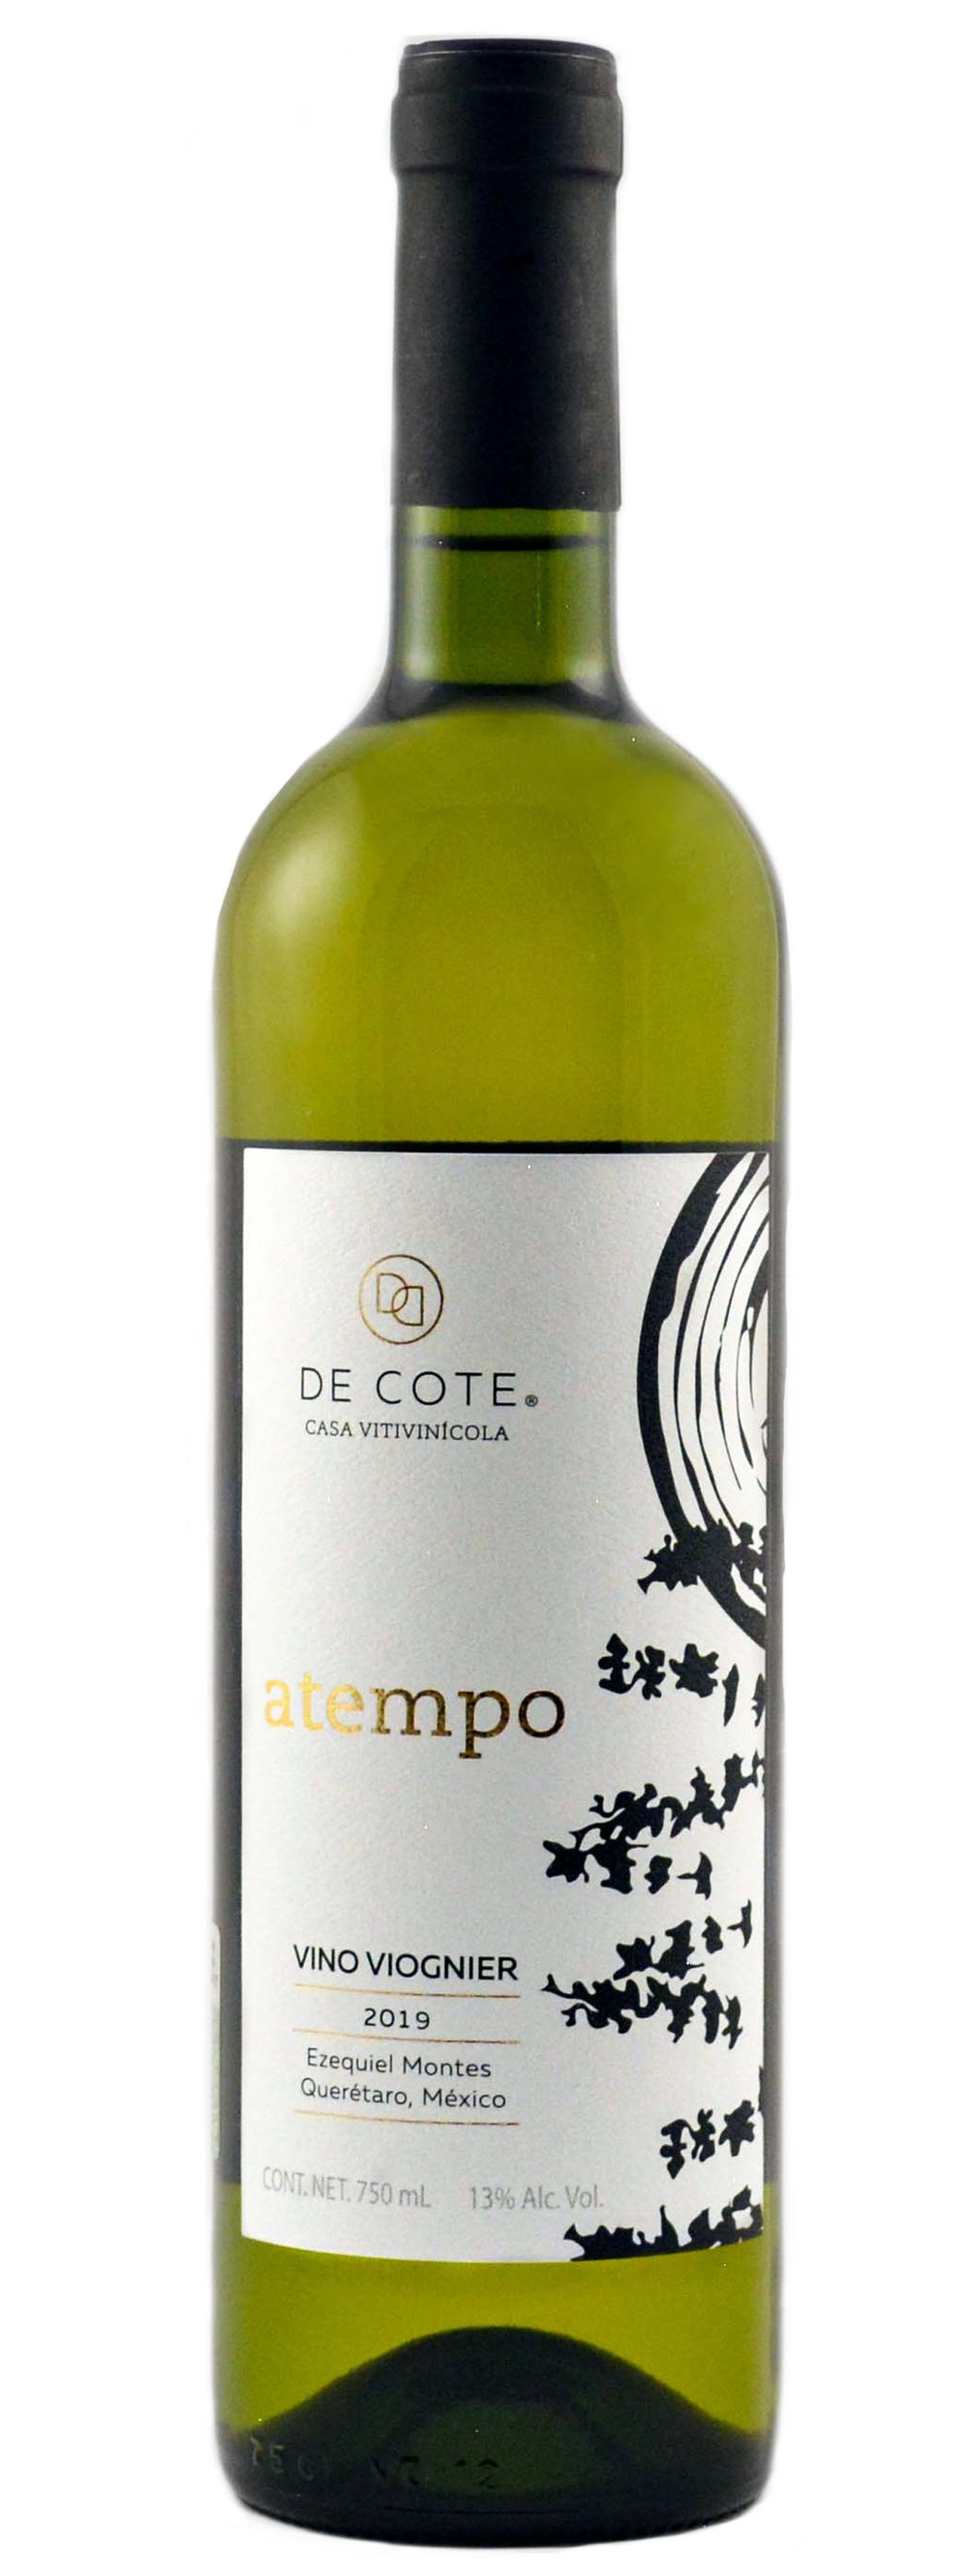 Vino Blanco De Cote Atempo Blanco Viognier 750 ml